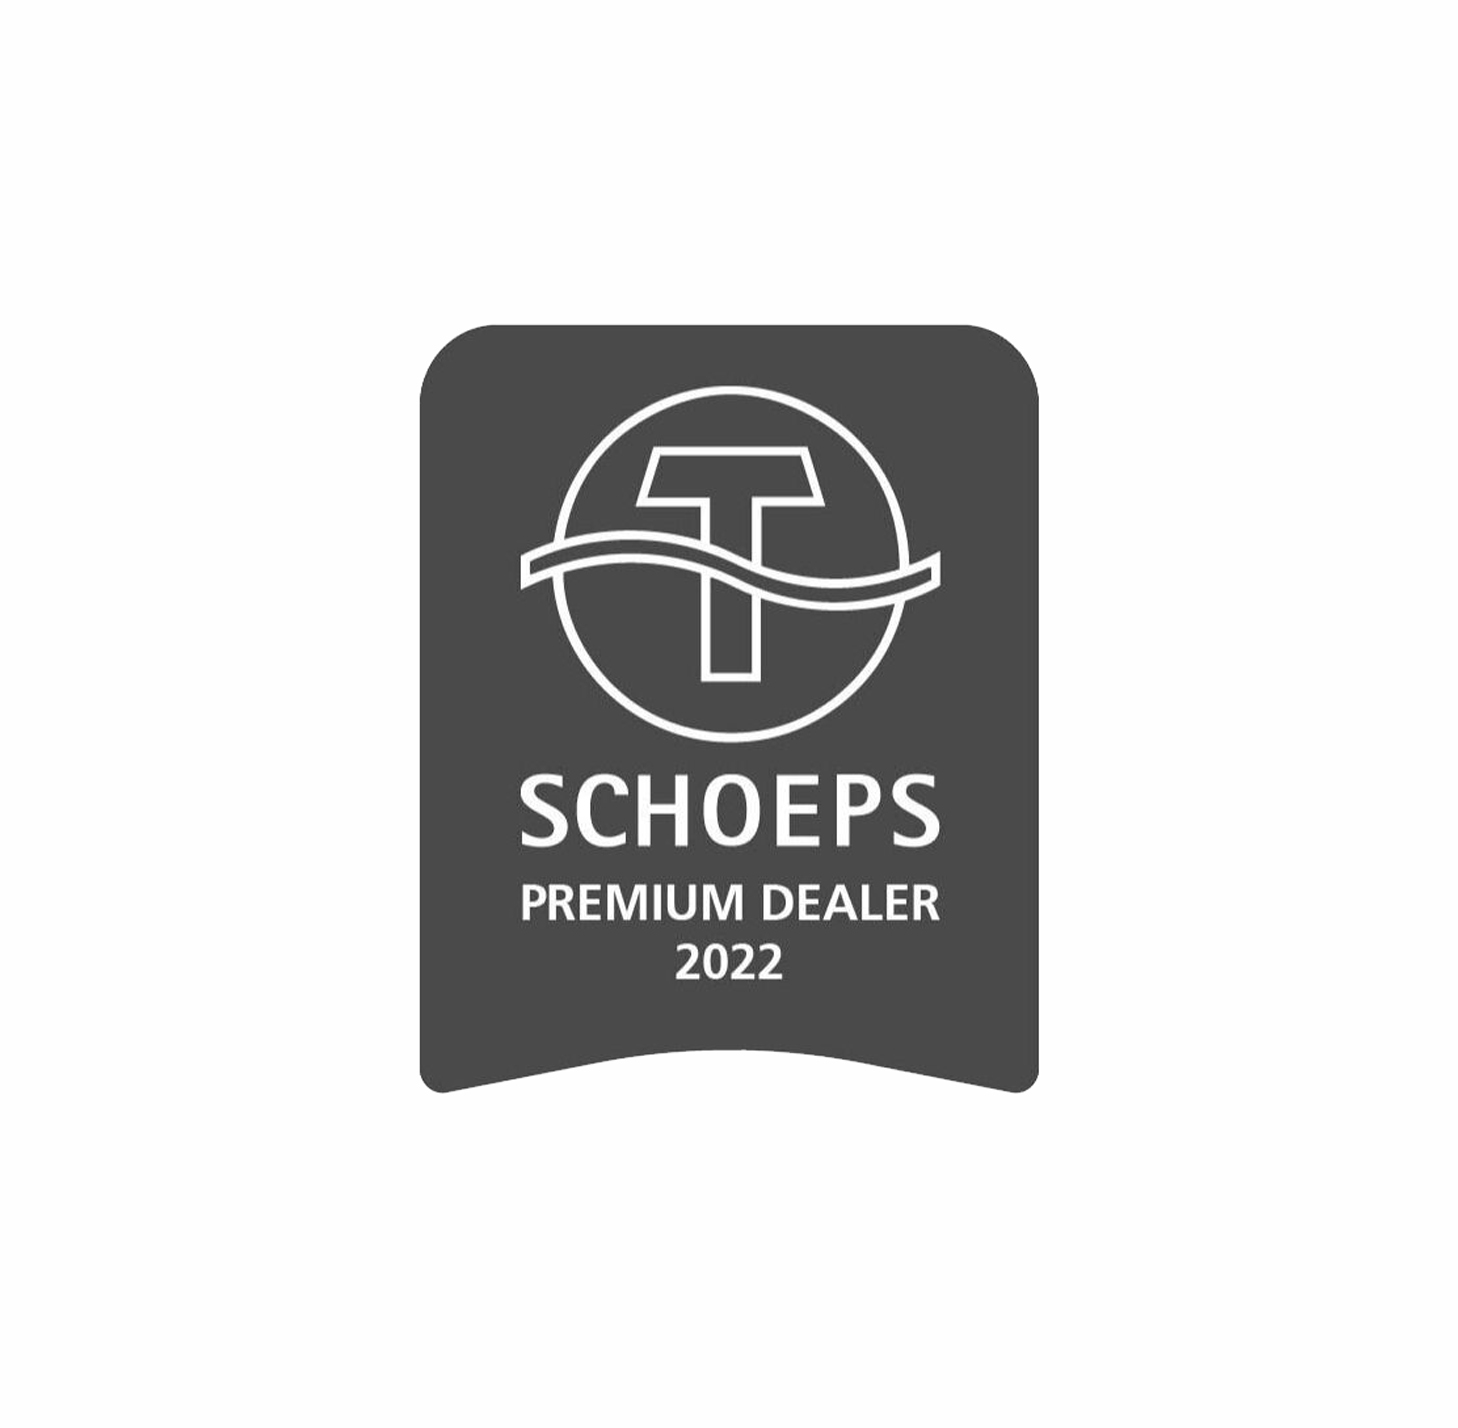 Schoeps Premium Dealer